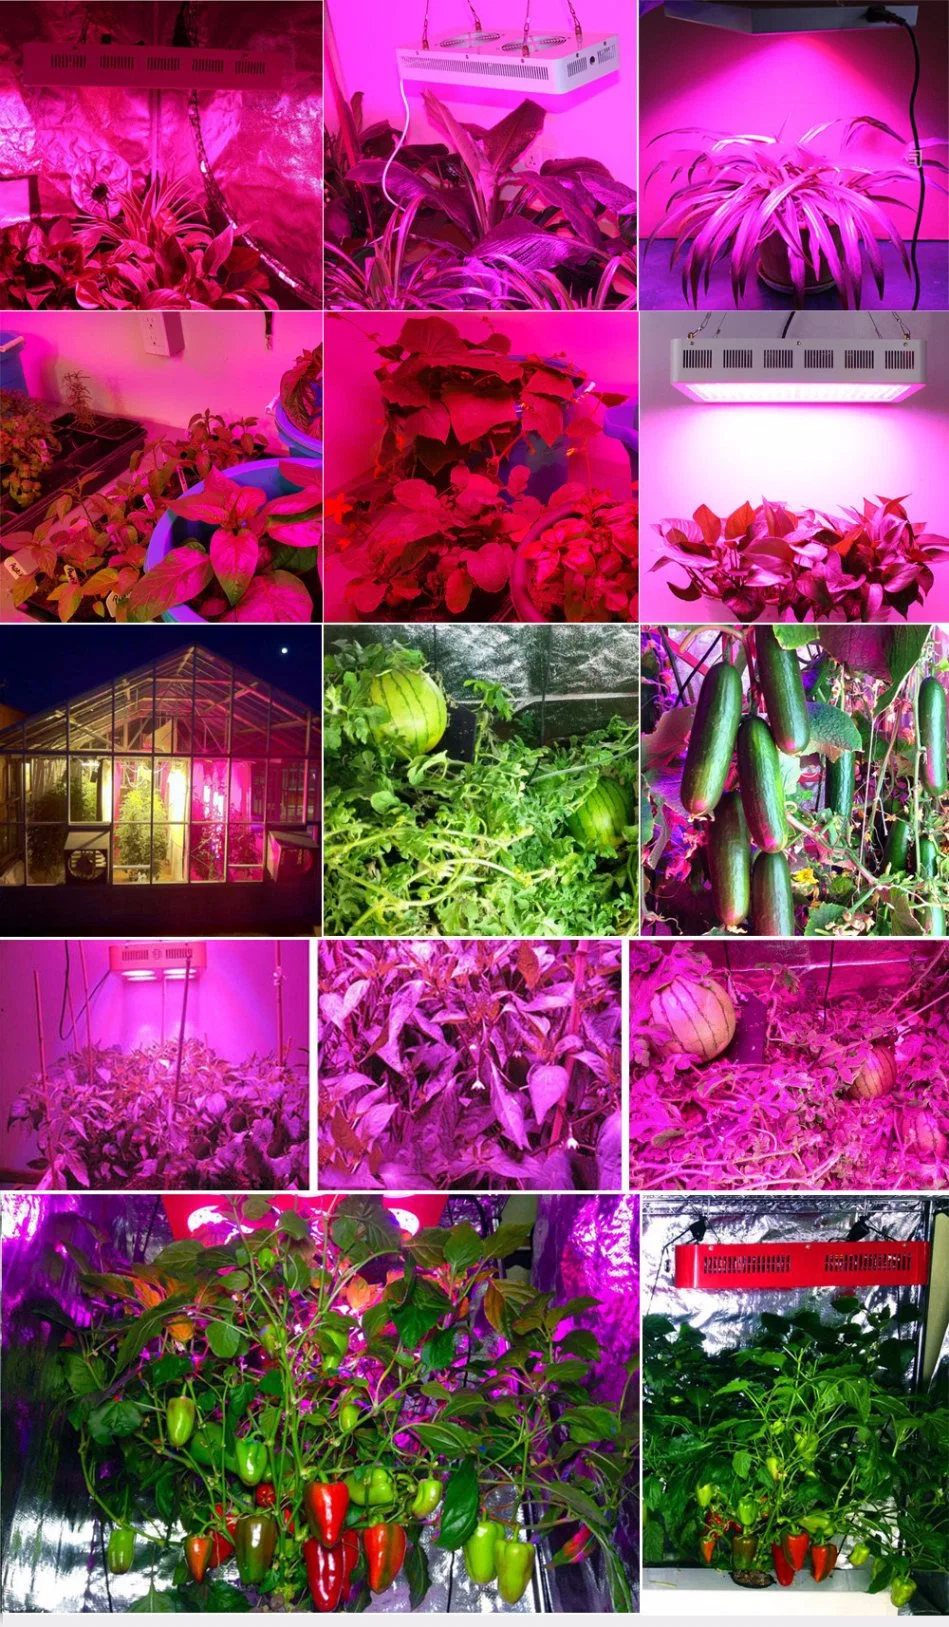 300W 600W 800W Full Spectrum LED Grow Light for Indoor Plants